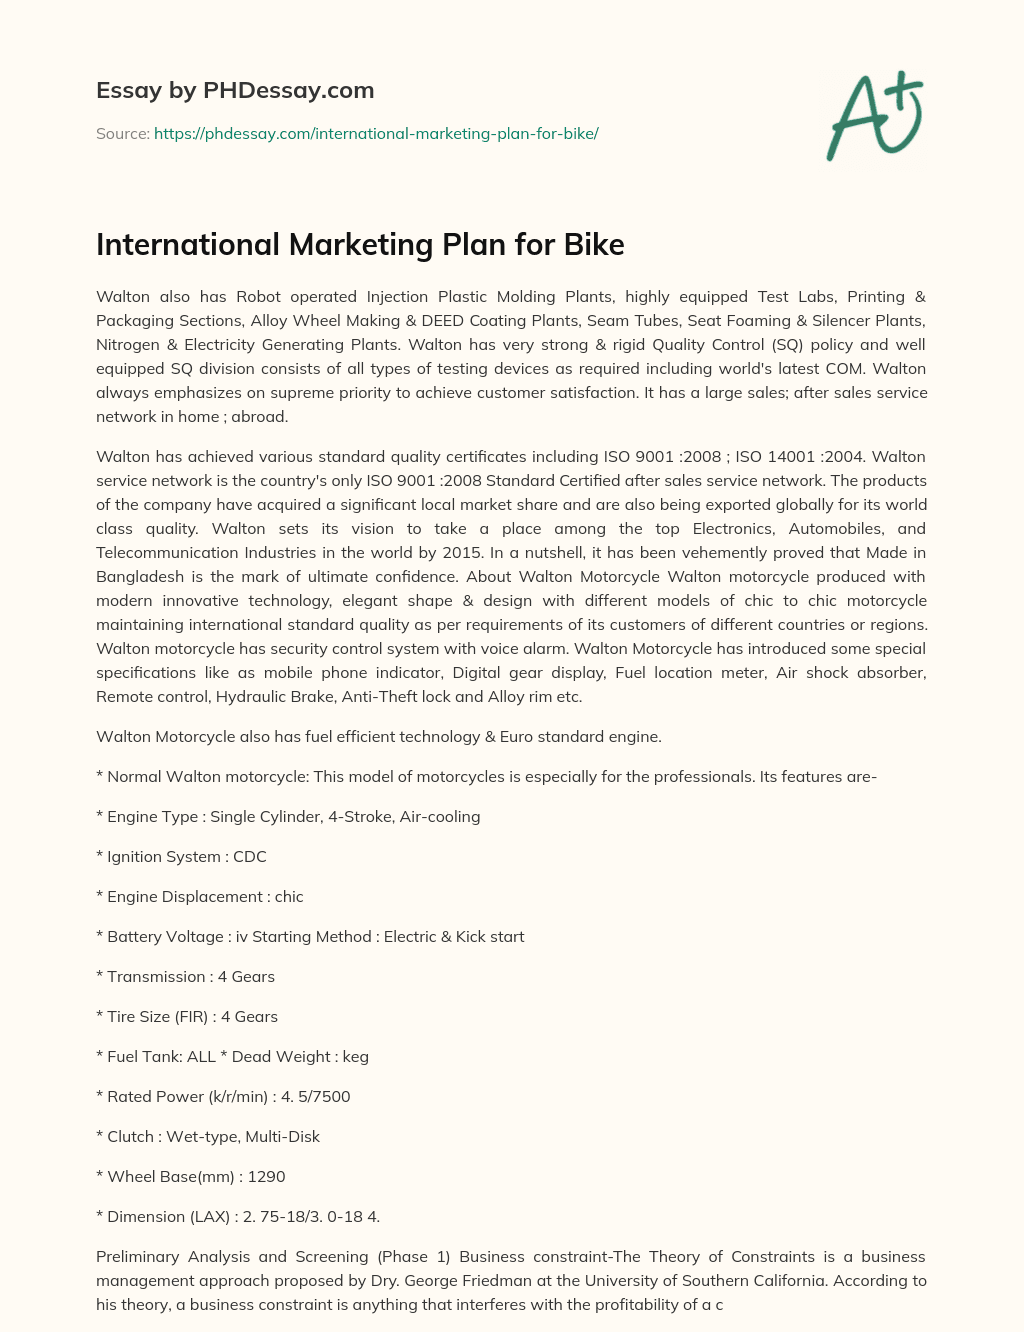 International Marketing Plan for Bike essay